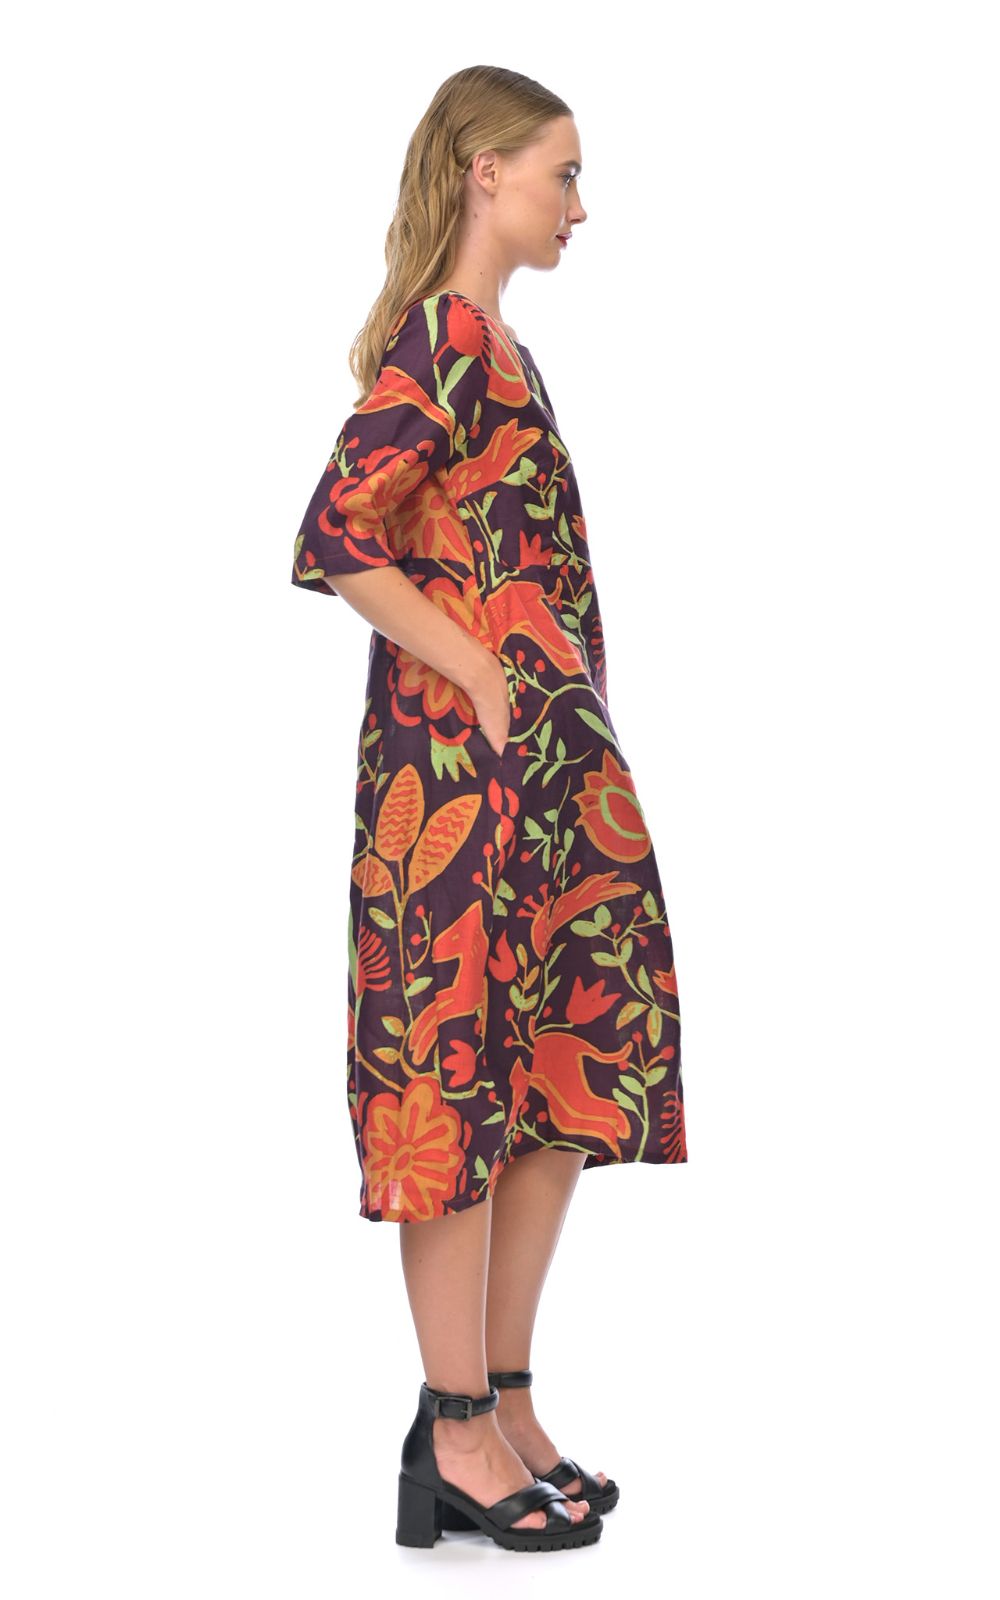 New Holland Linen Romance Dress product photo.